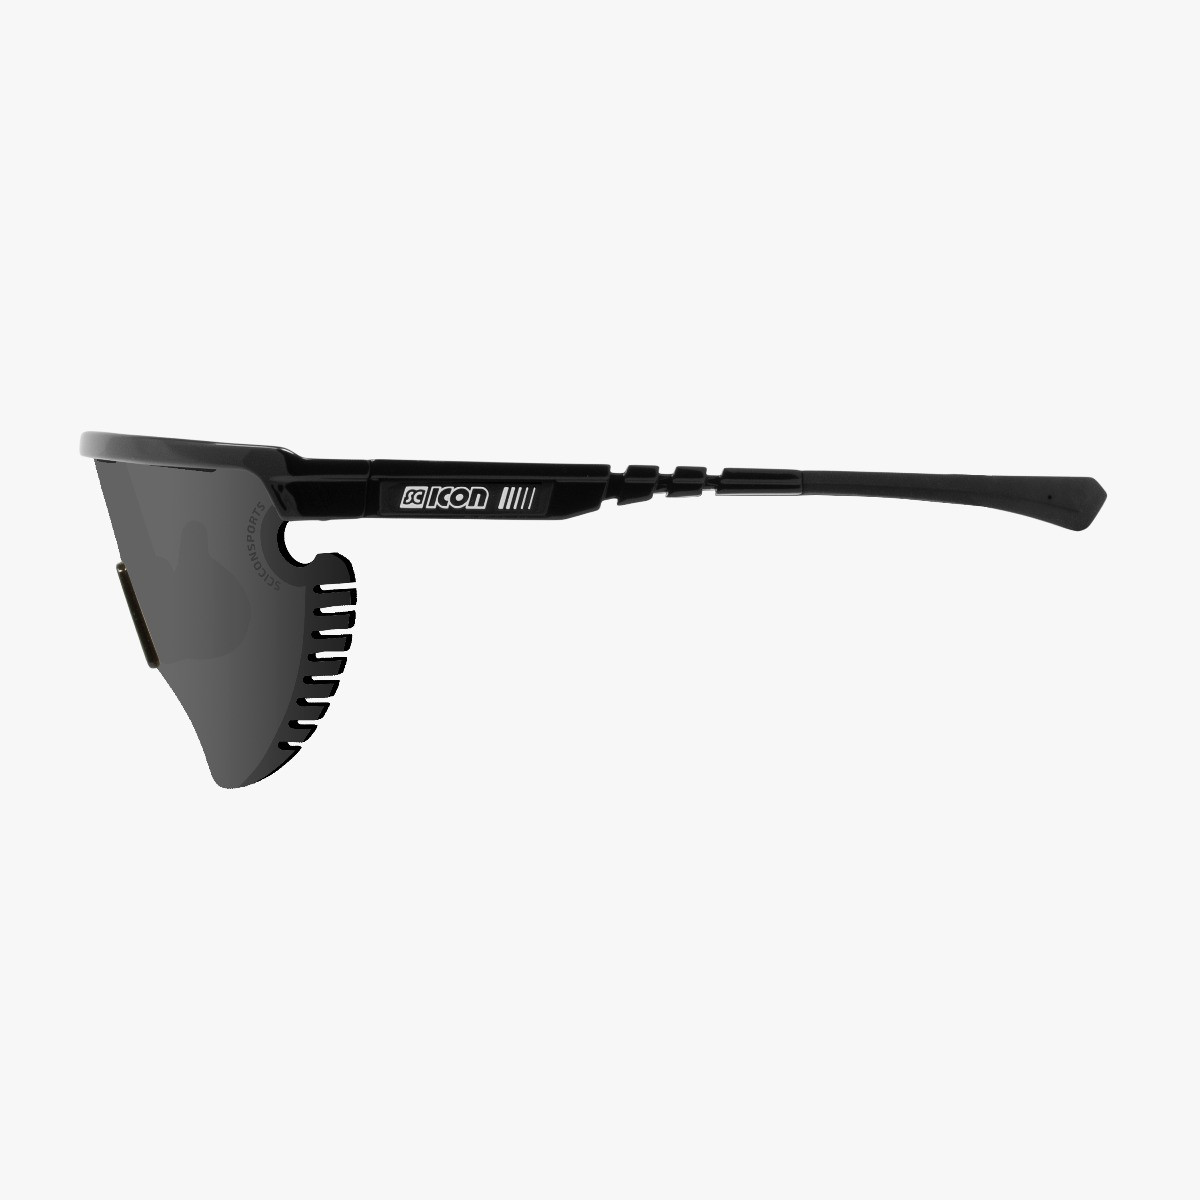 Scicon Sports | Aerowing Lamon Sport Performance Sunglasses - Black Gloss / Multimirror Silver - EY30080200